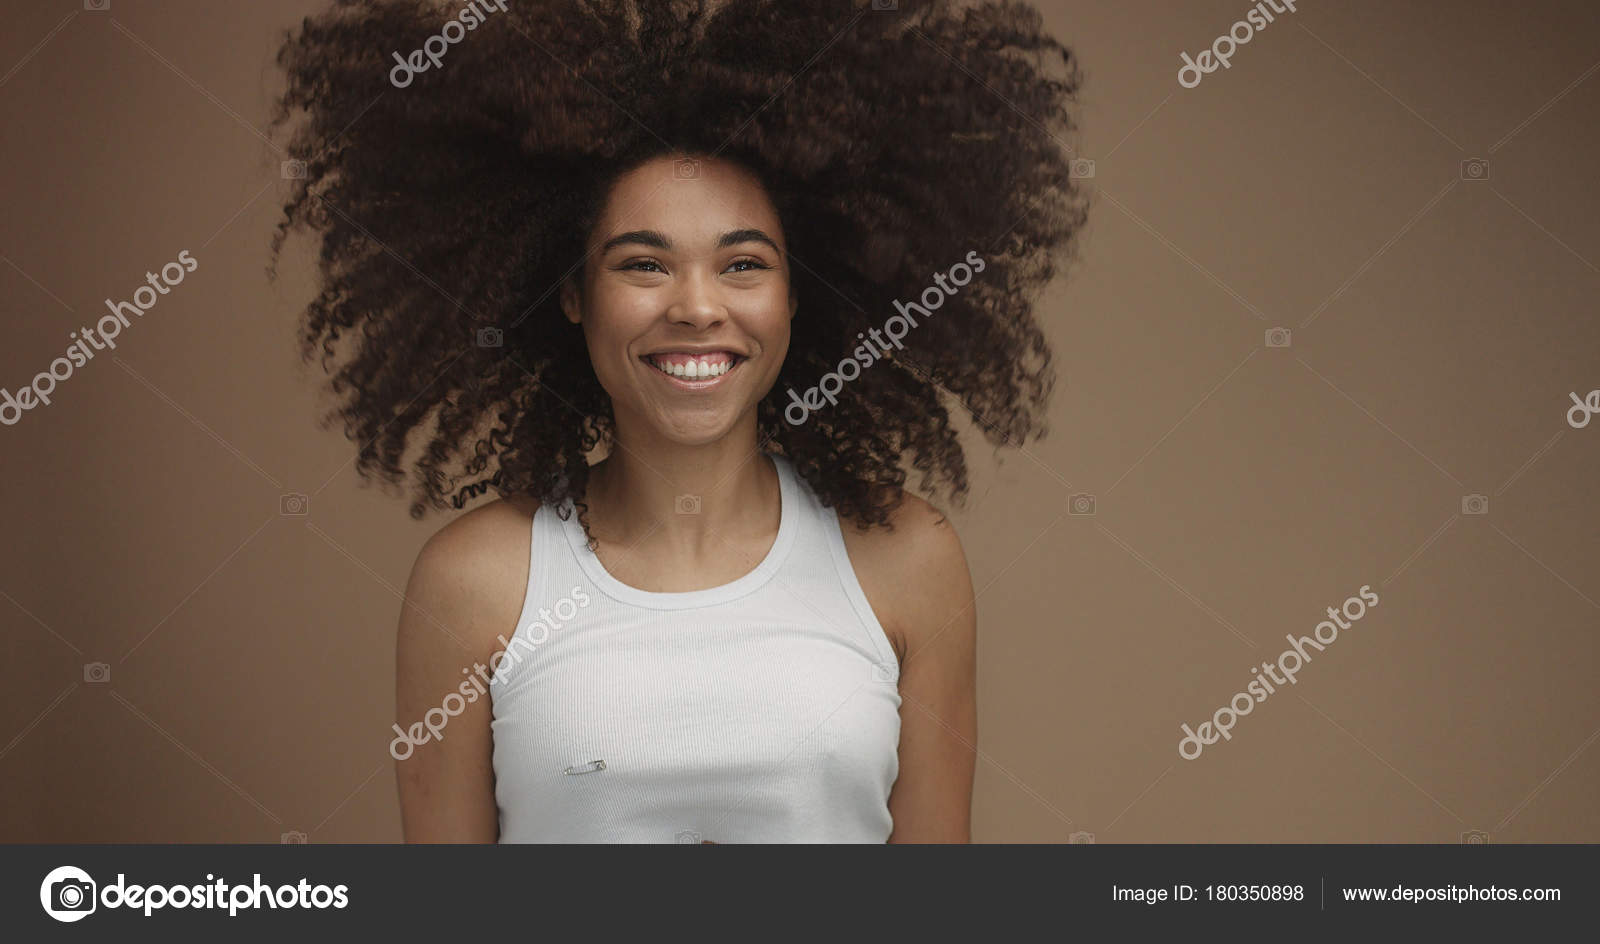 depositphotos_180350898-stock-photo-mixed-race-black-woman-portrait.jpg